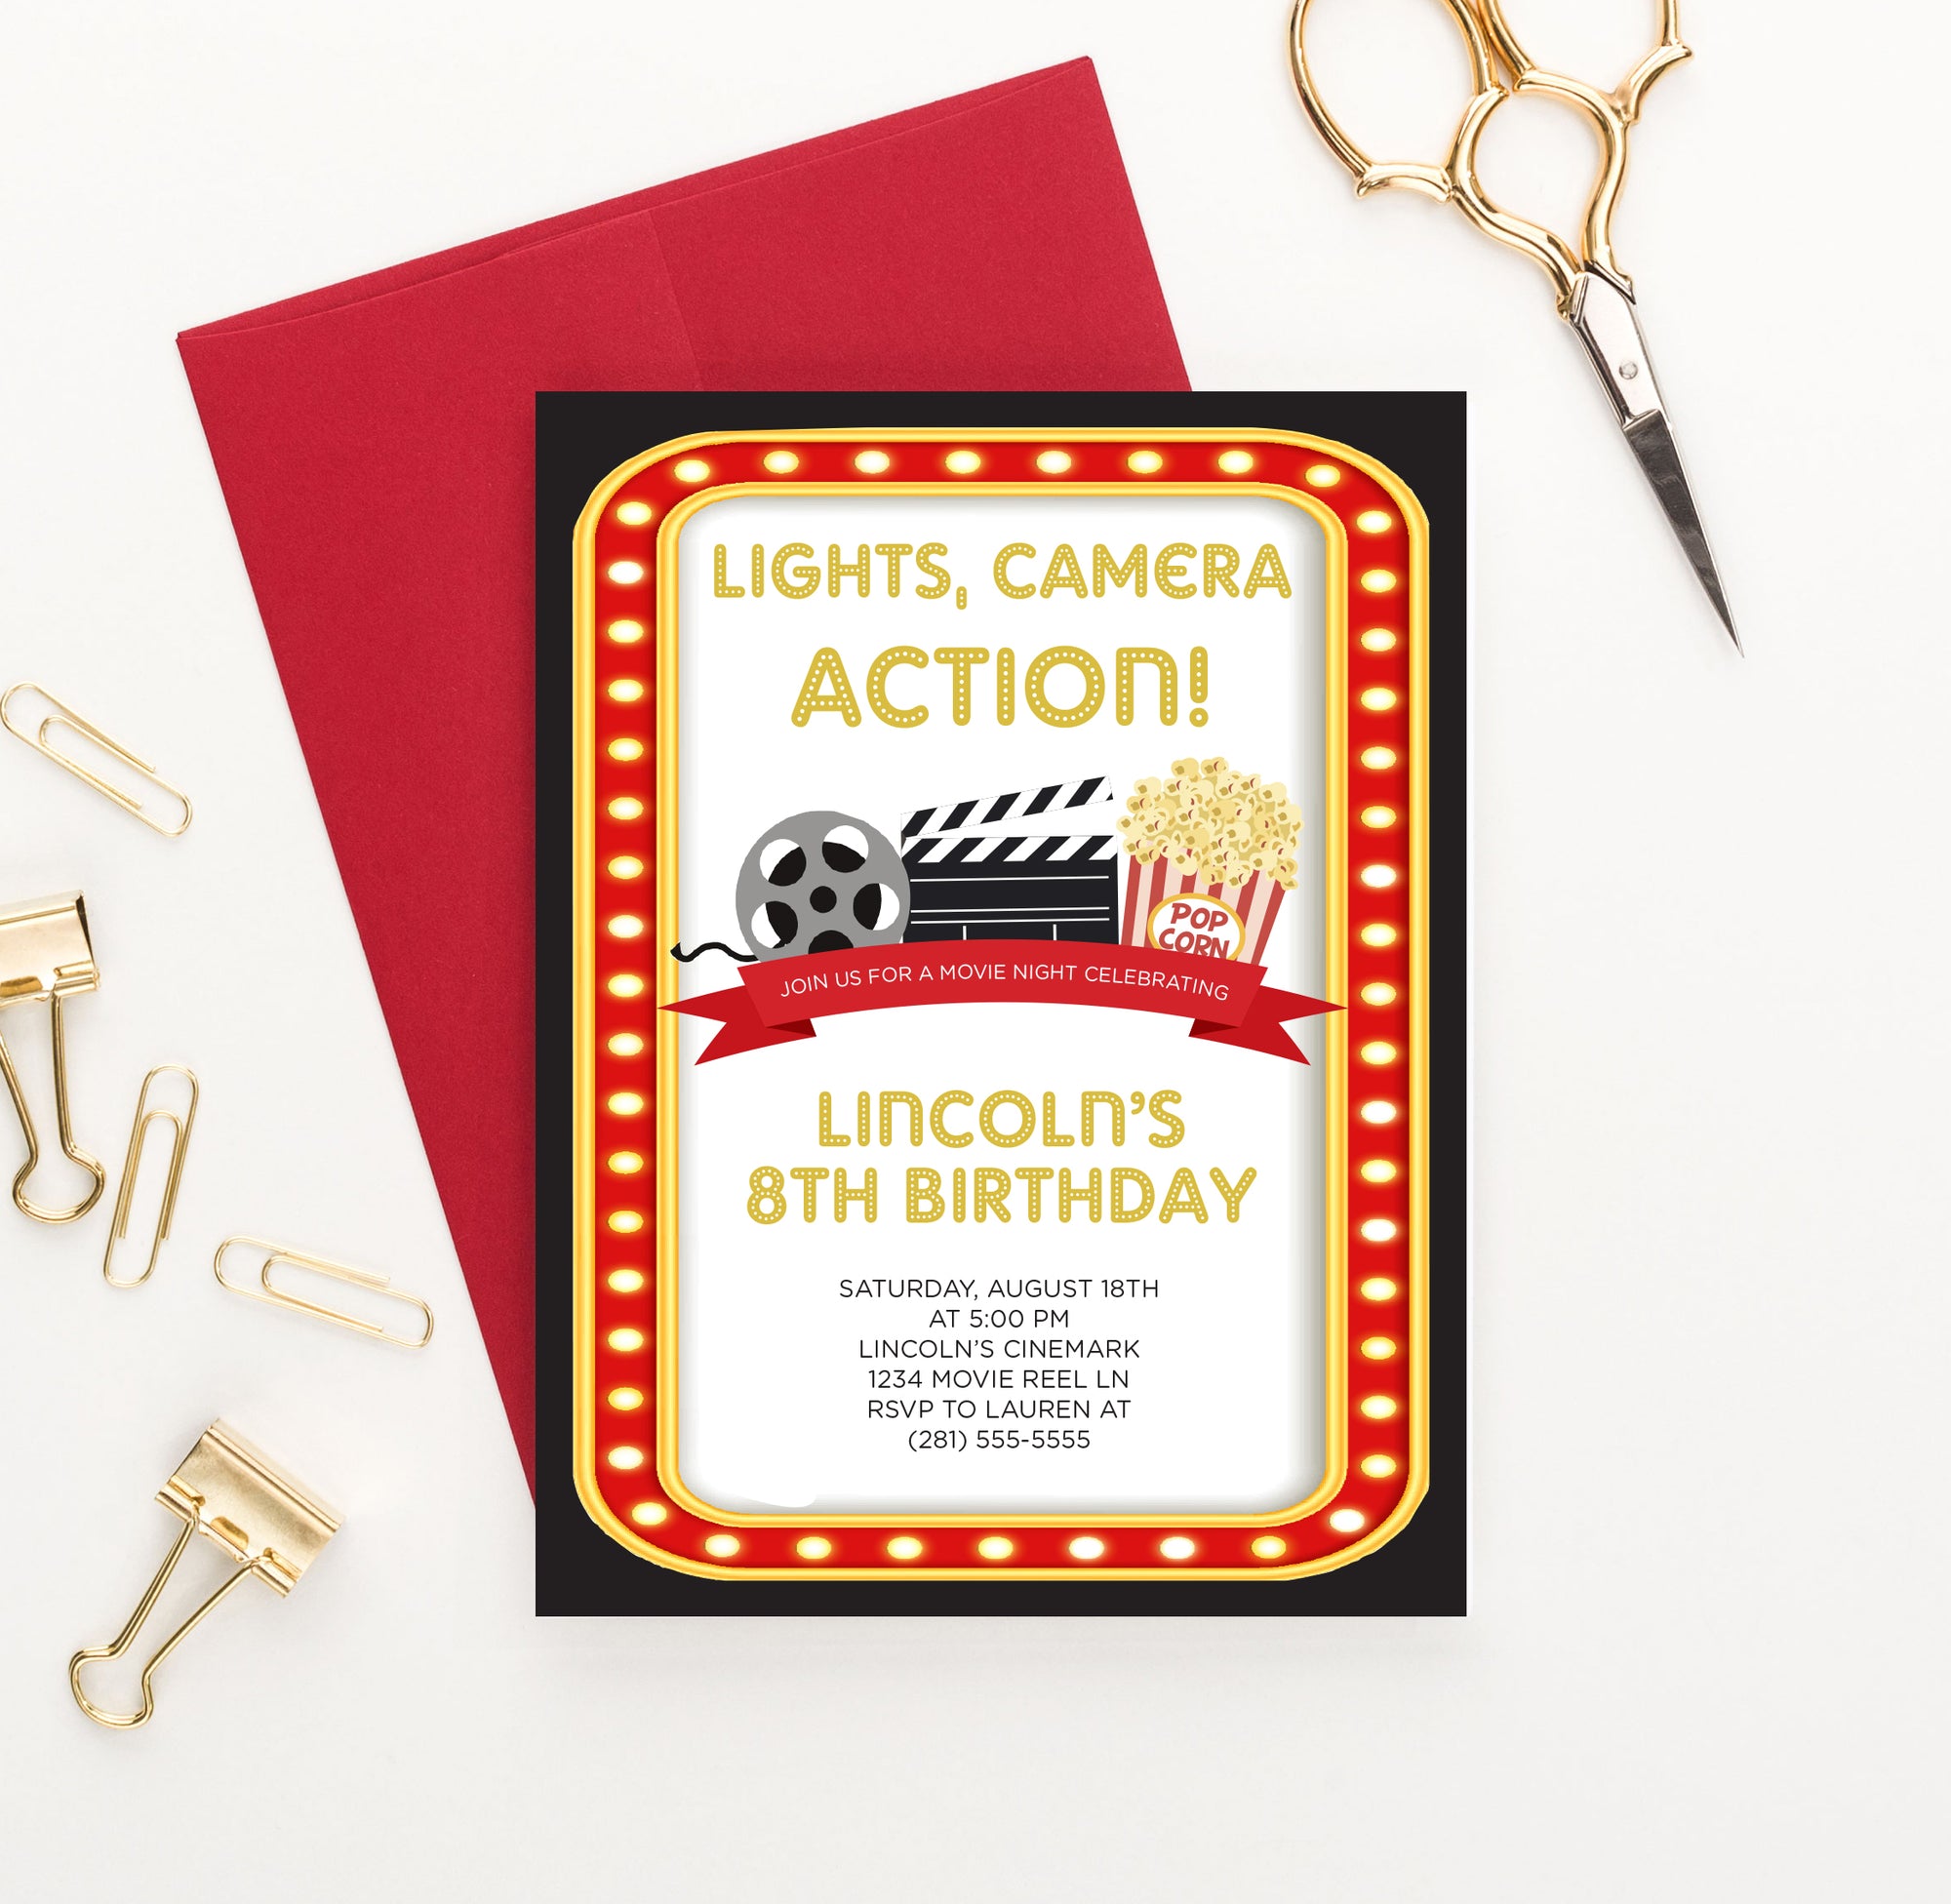 Lights, Camera, Action Movie Birthday Party Invitations